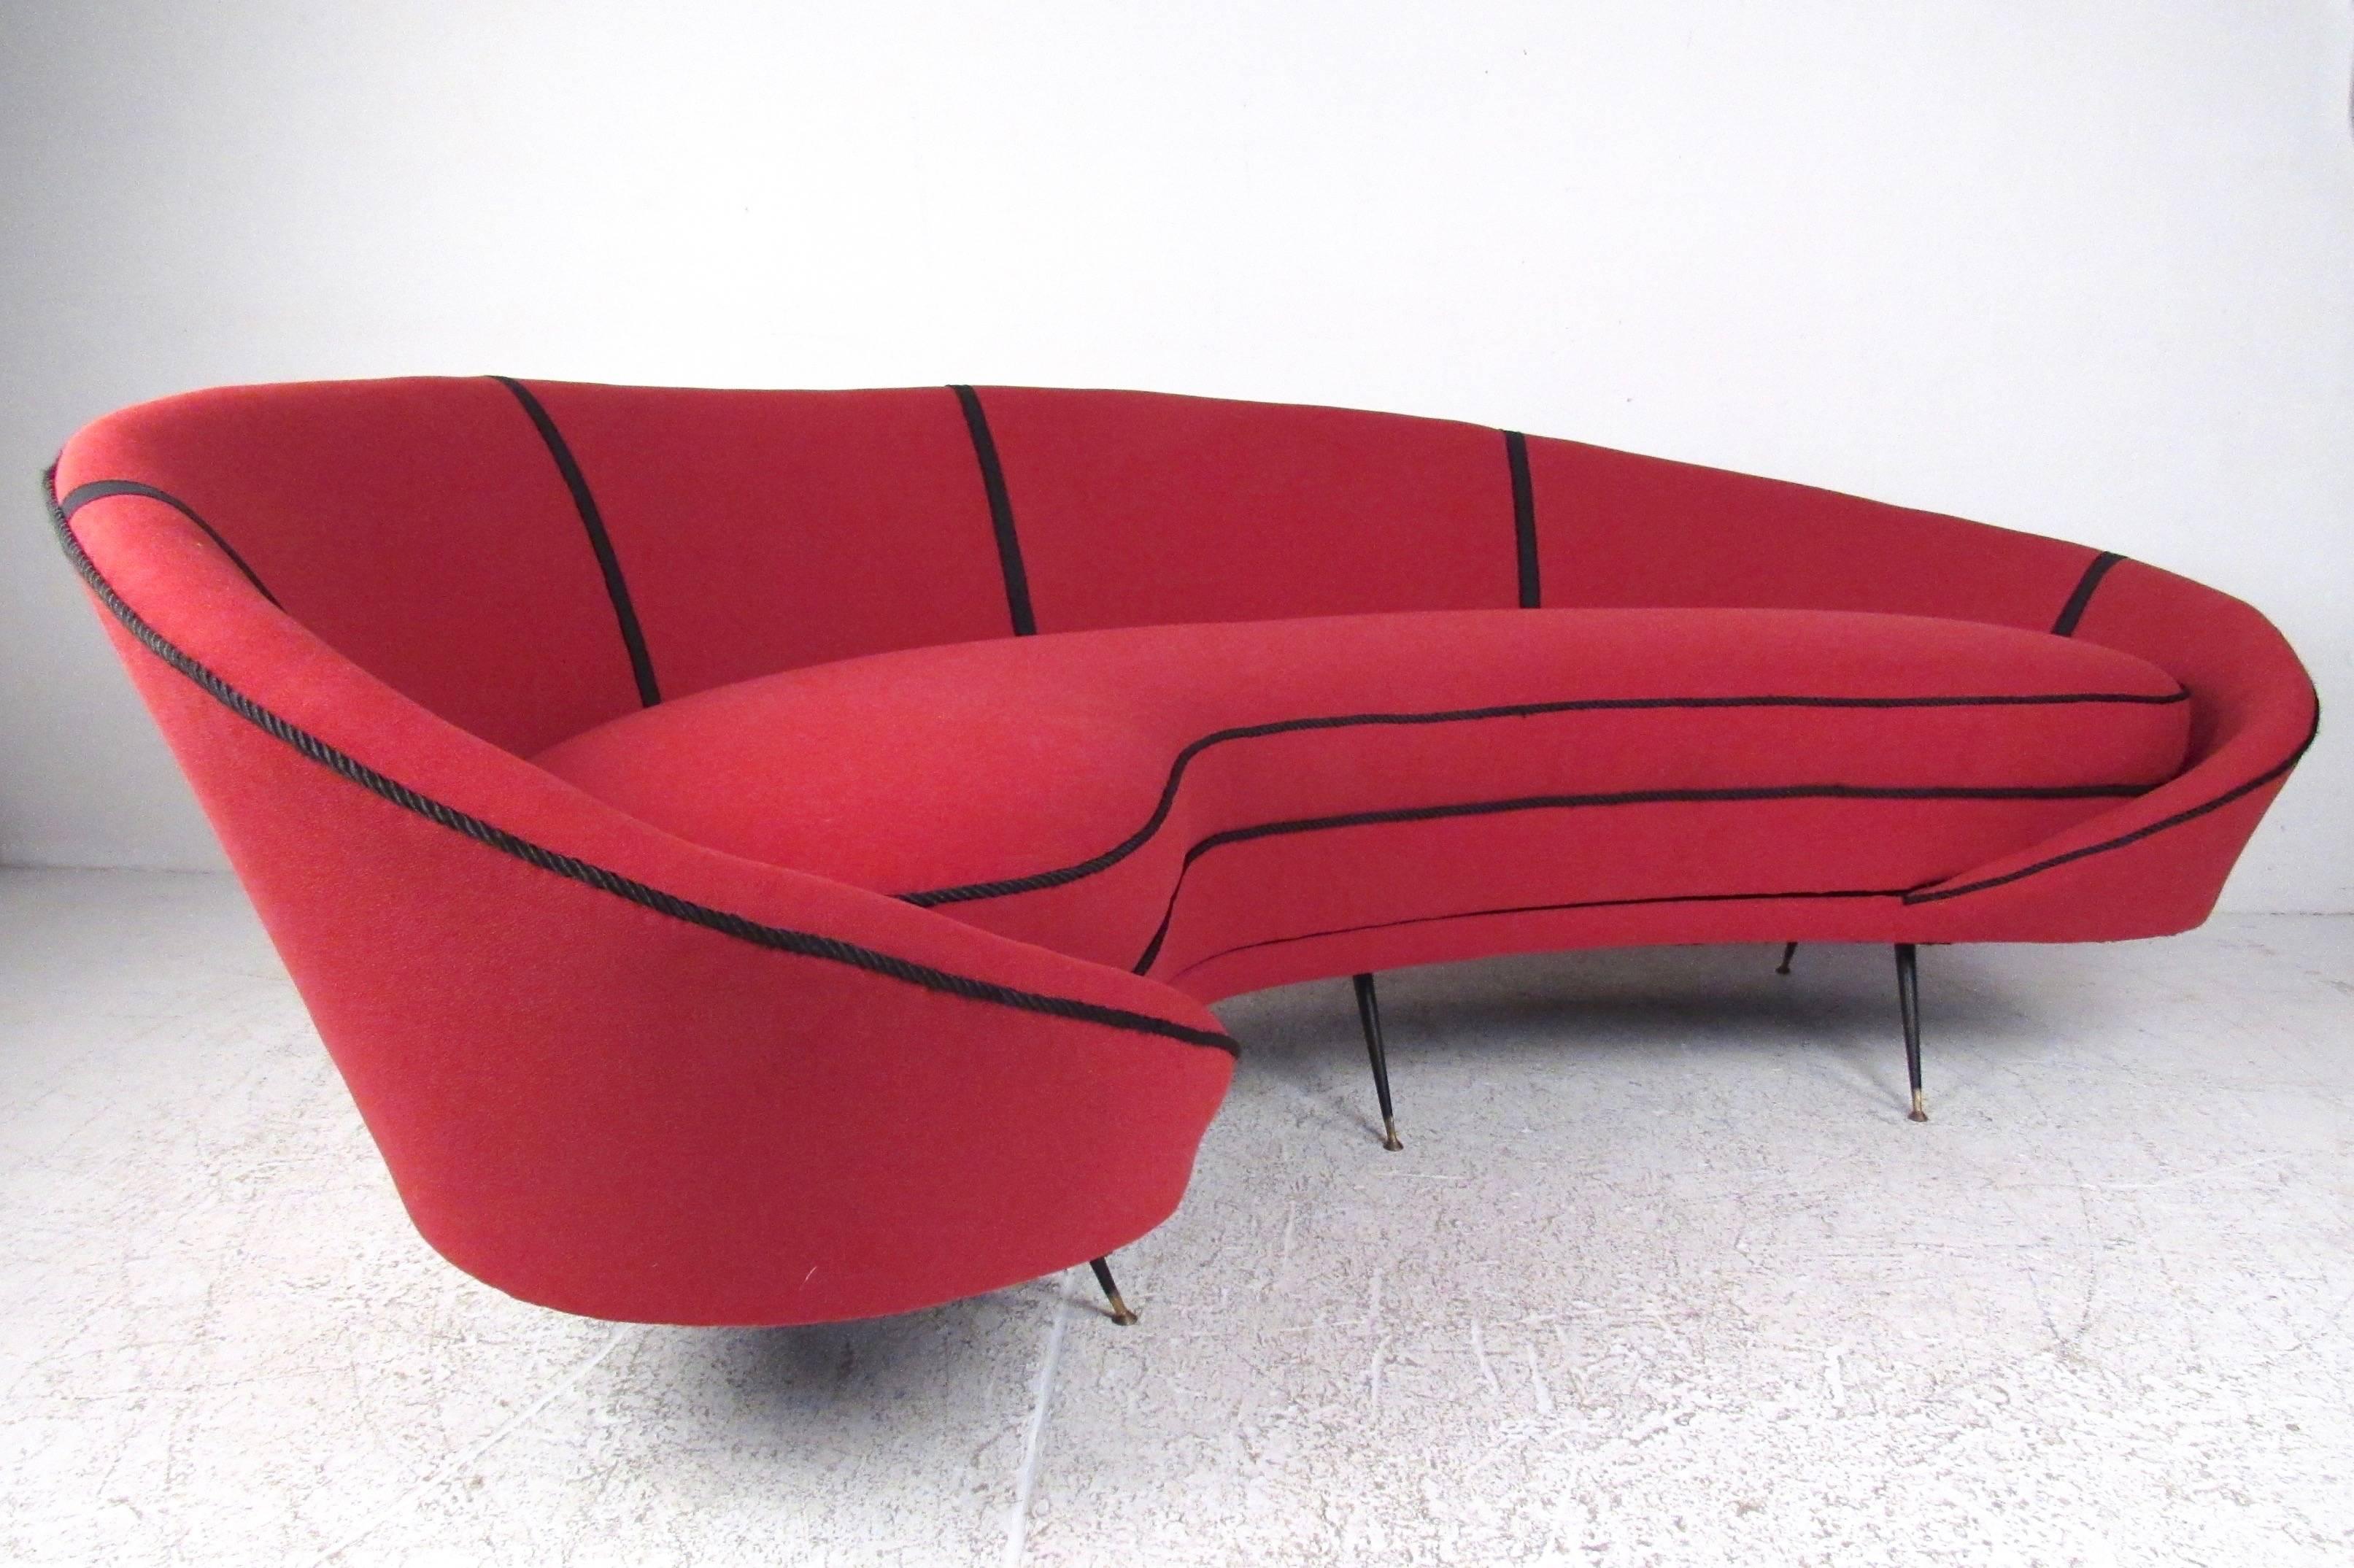 20th Century Sculptural Italian Modern Sofa after Ico Parisi